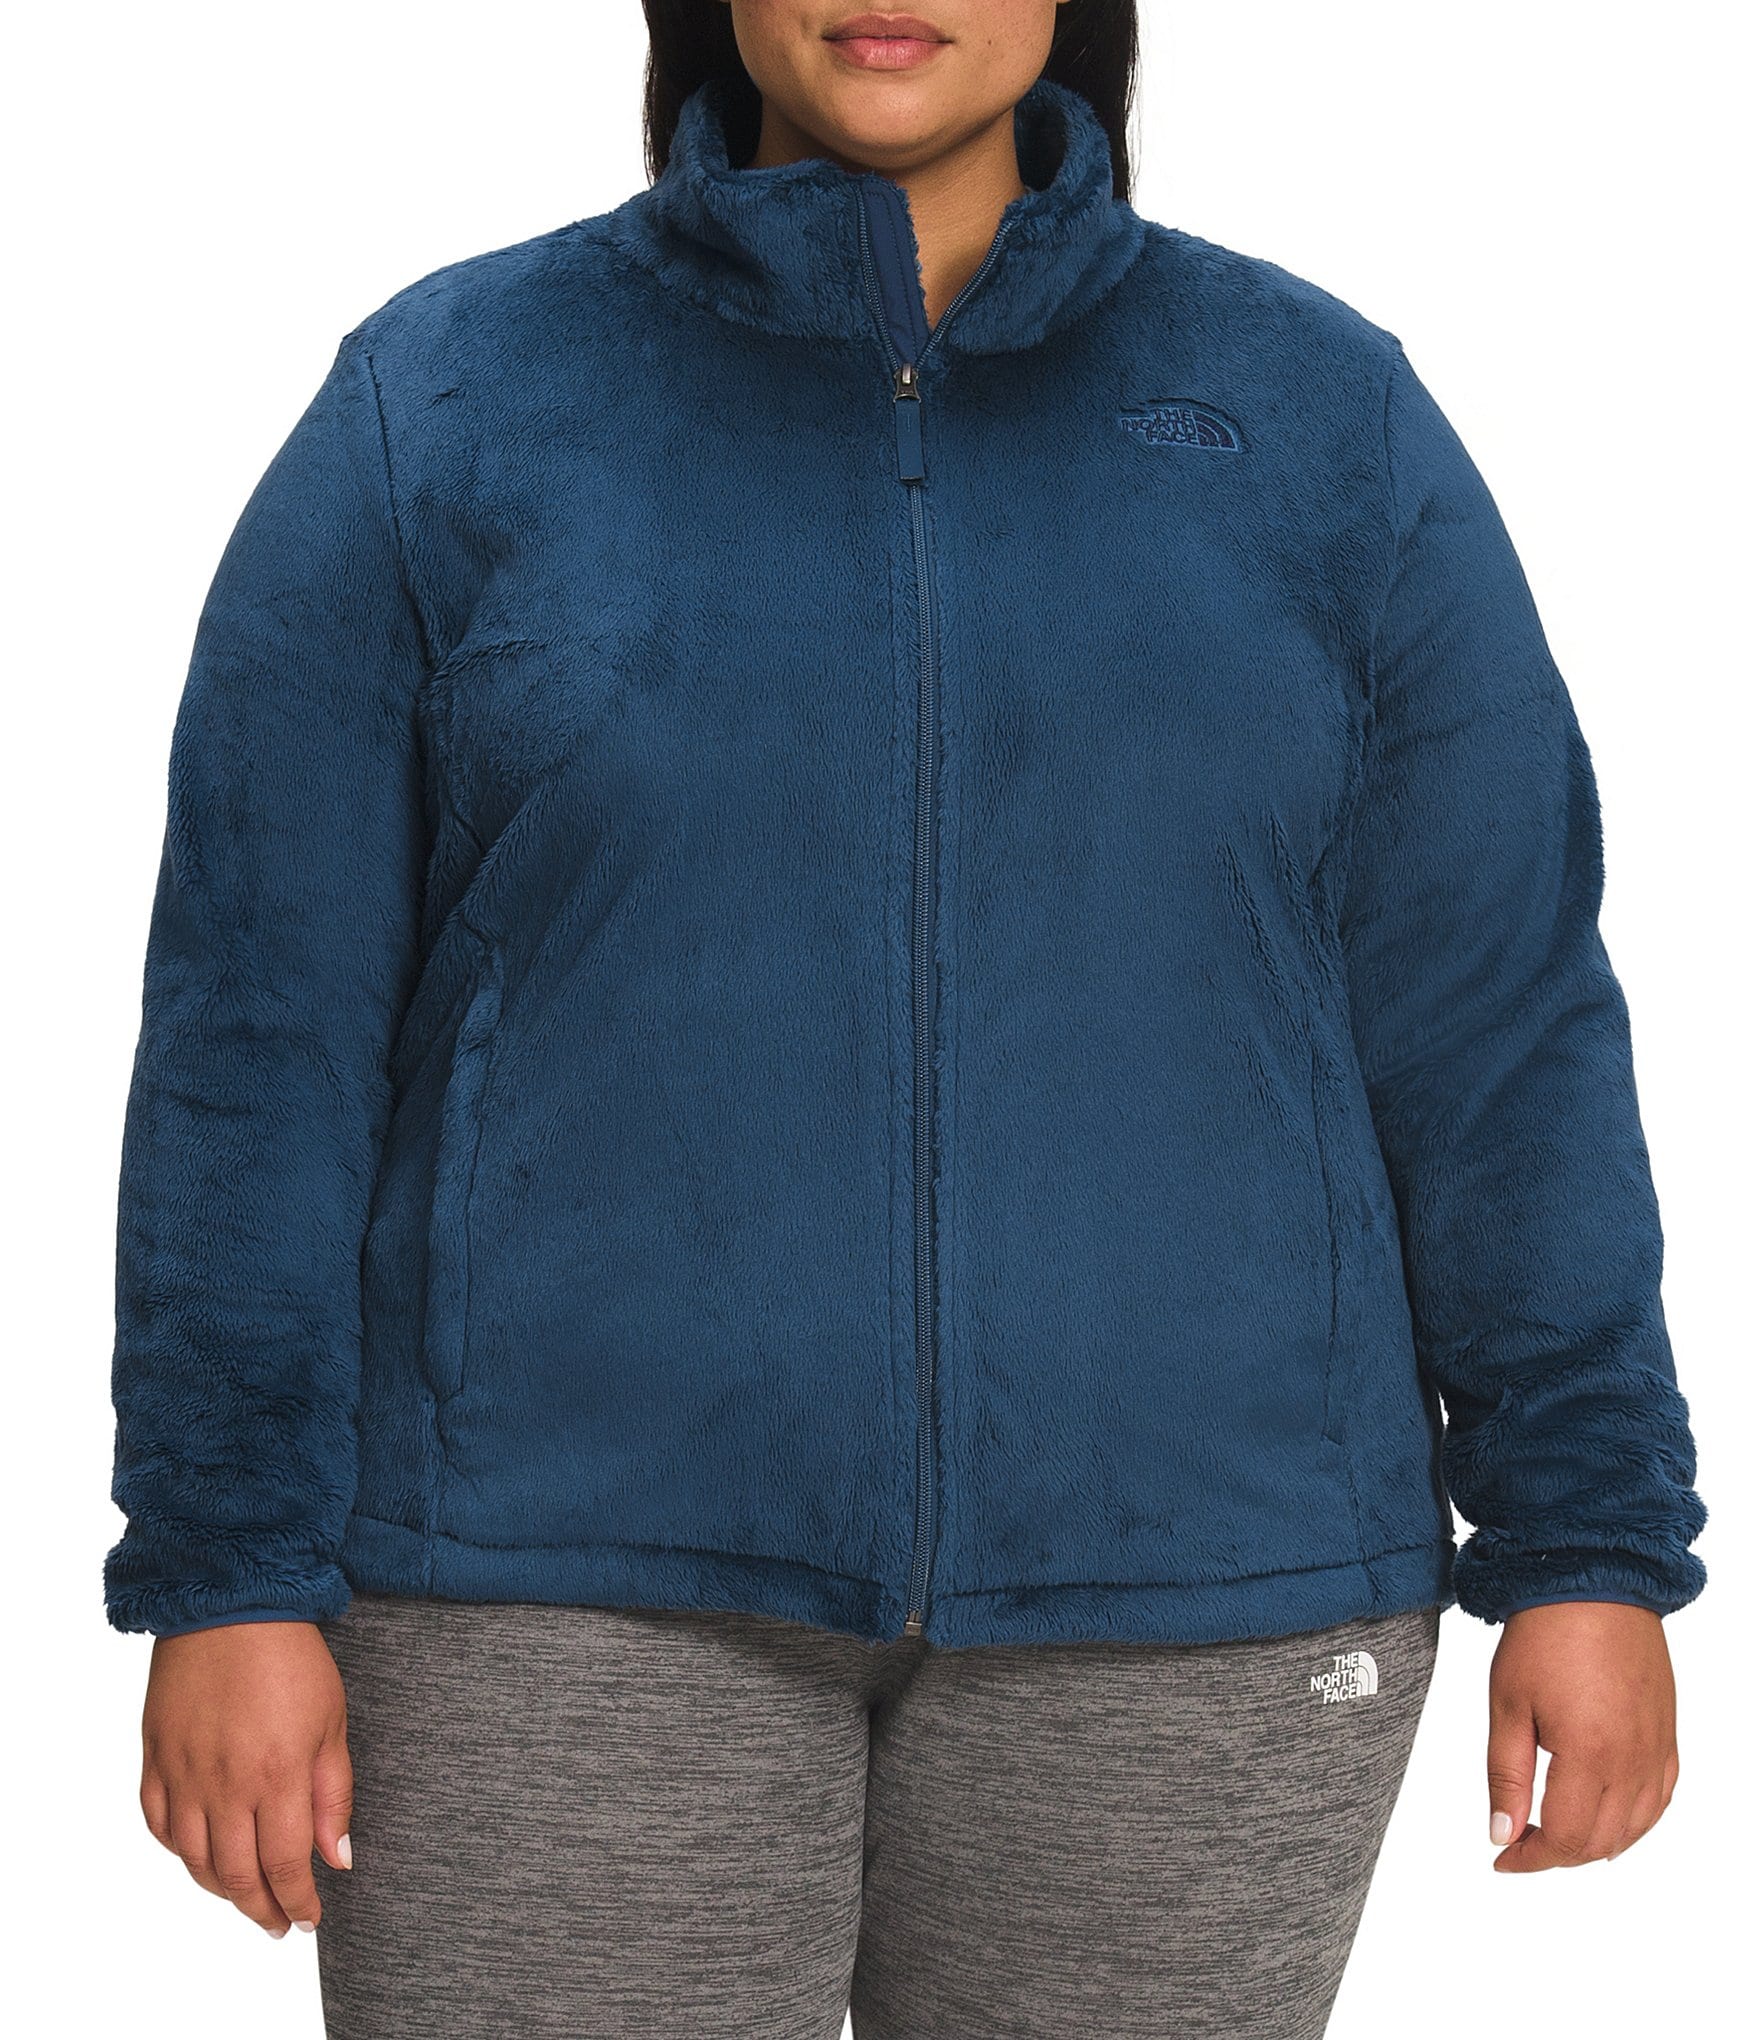 The North Face Osito Jacket  Fleece coat jacket, Jackets, North face jacket